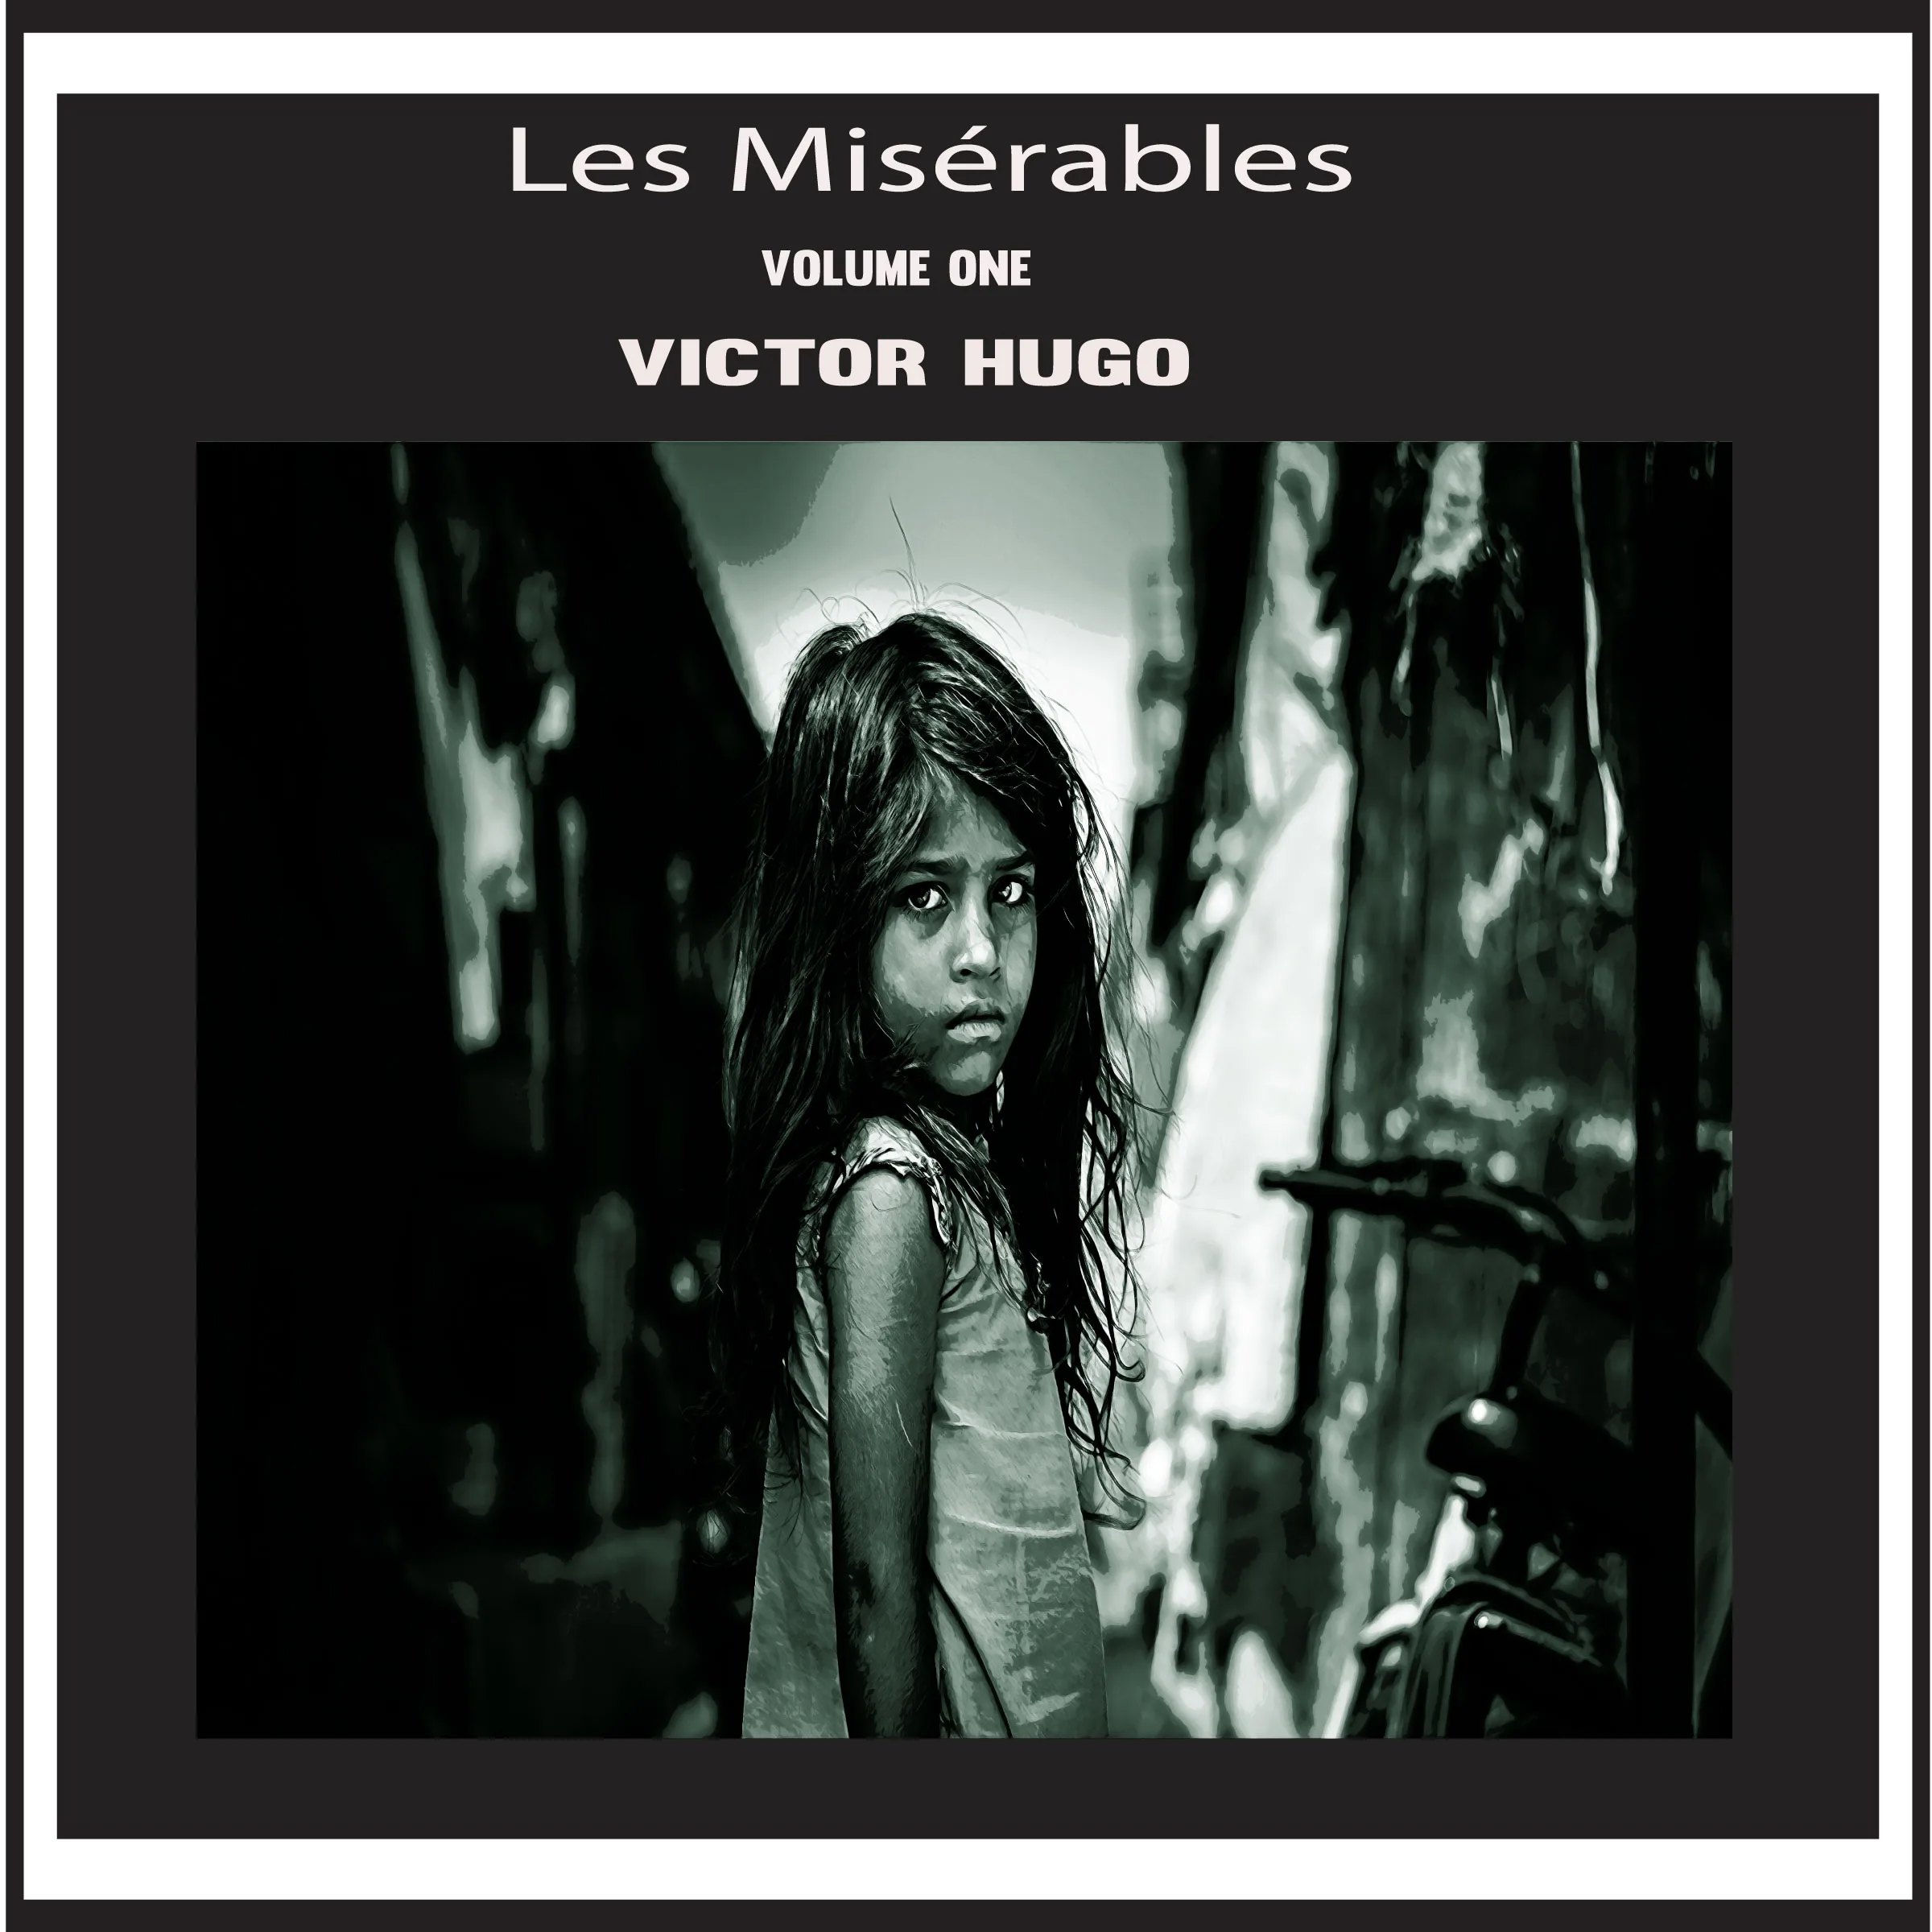 Les Miserables Volume 1, Victor Hugo